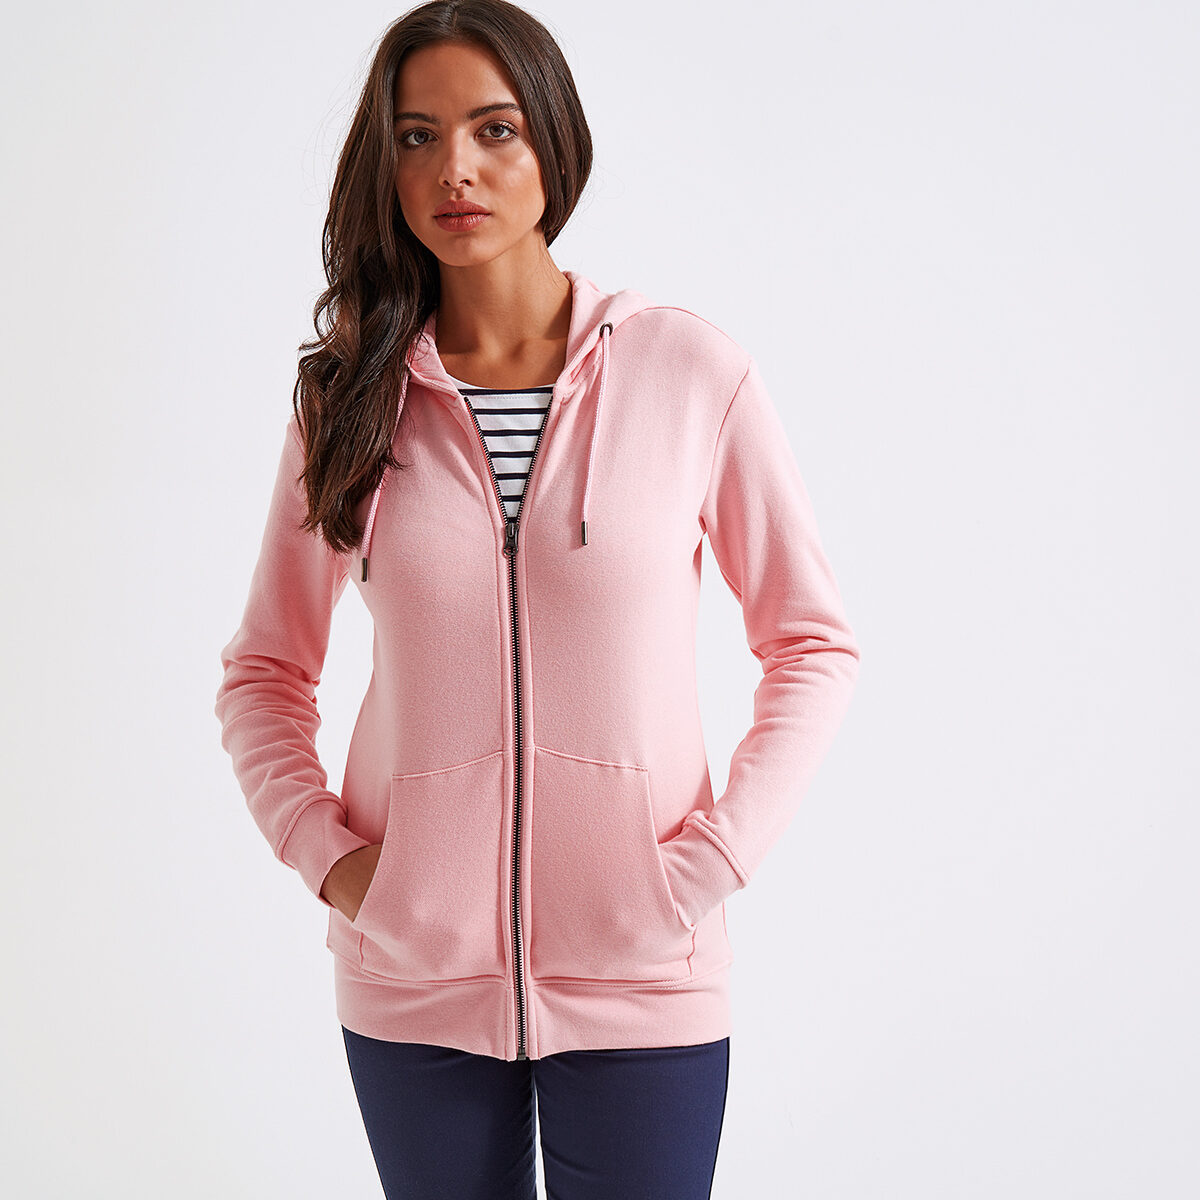 Women's zip-through organic hoodie